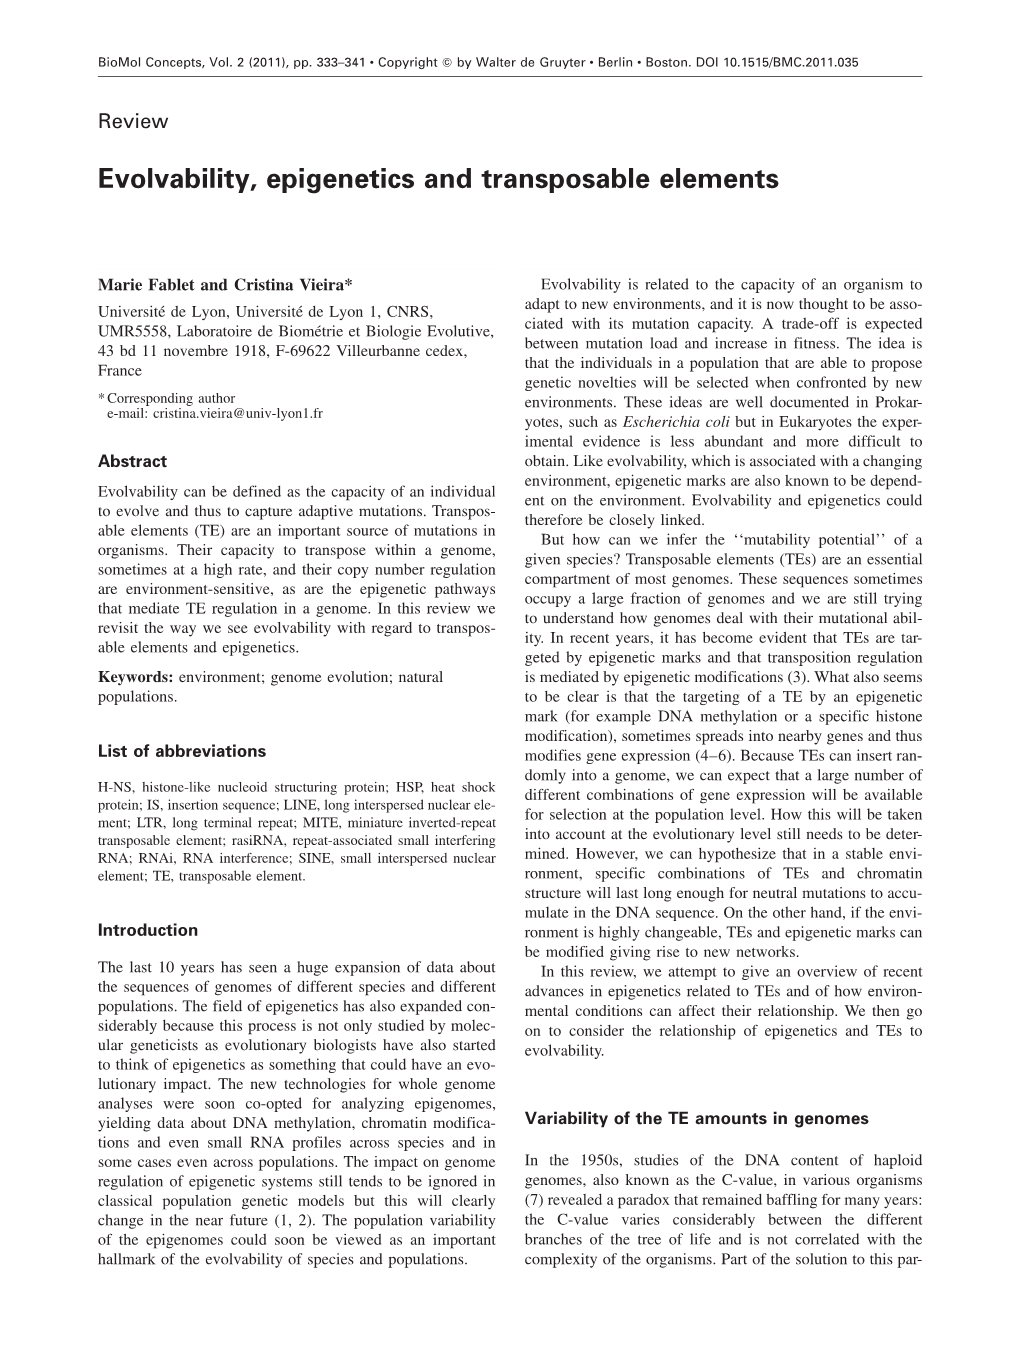 Evolvability, Epigenetics and Transposable Elements